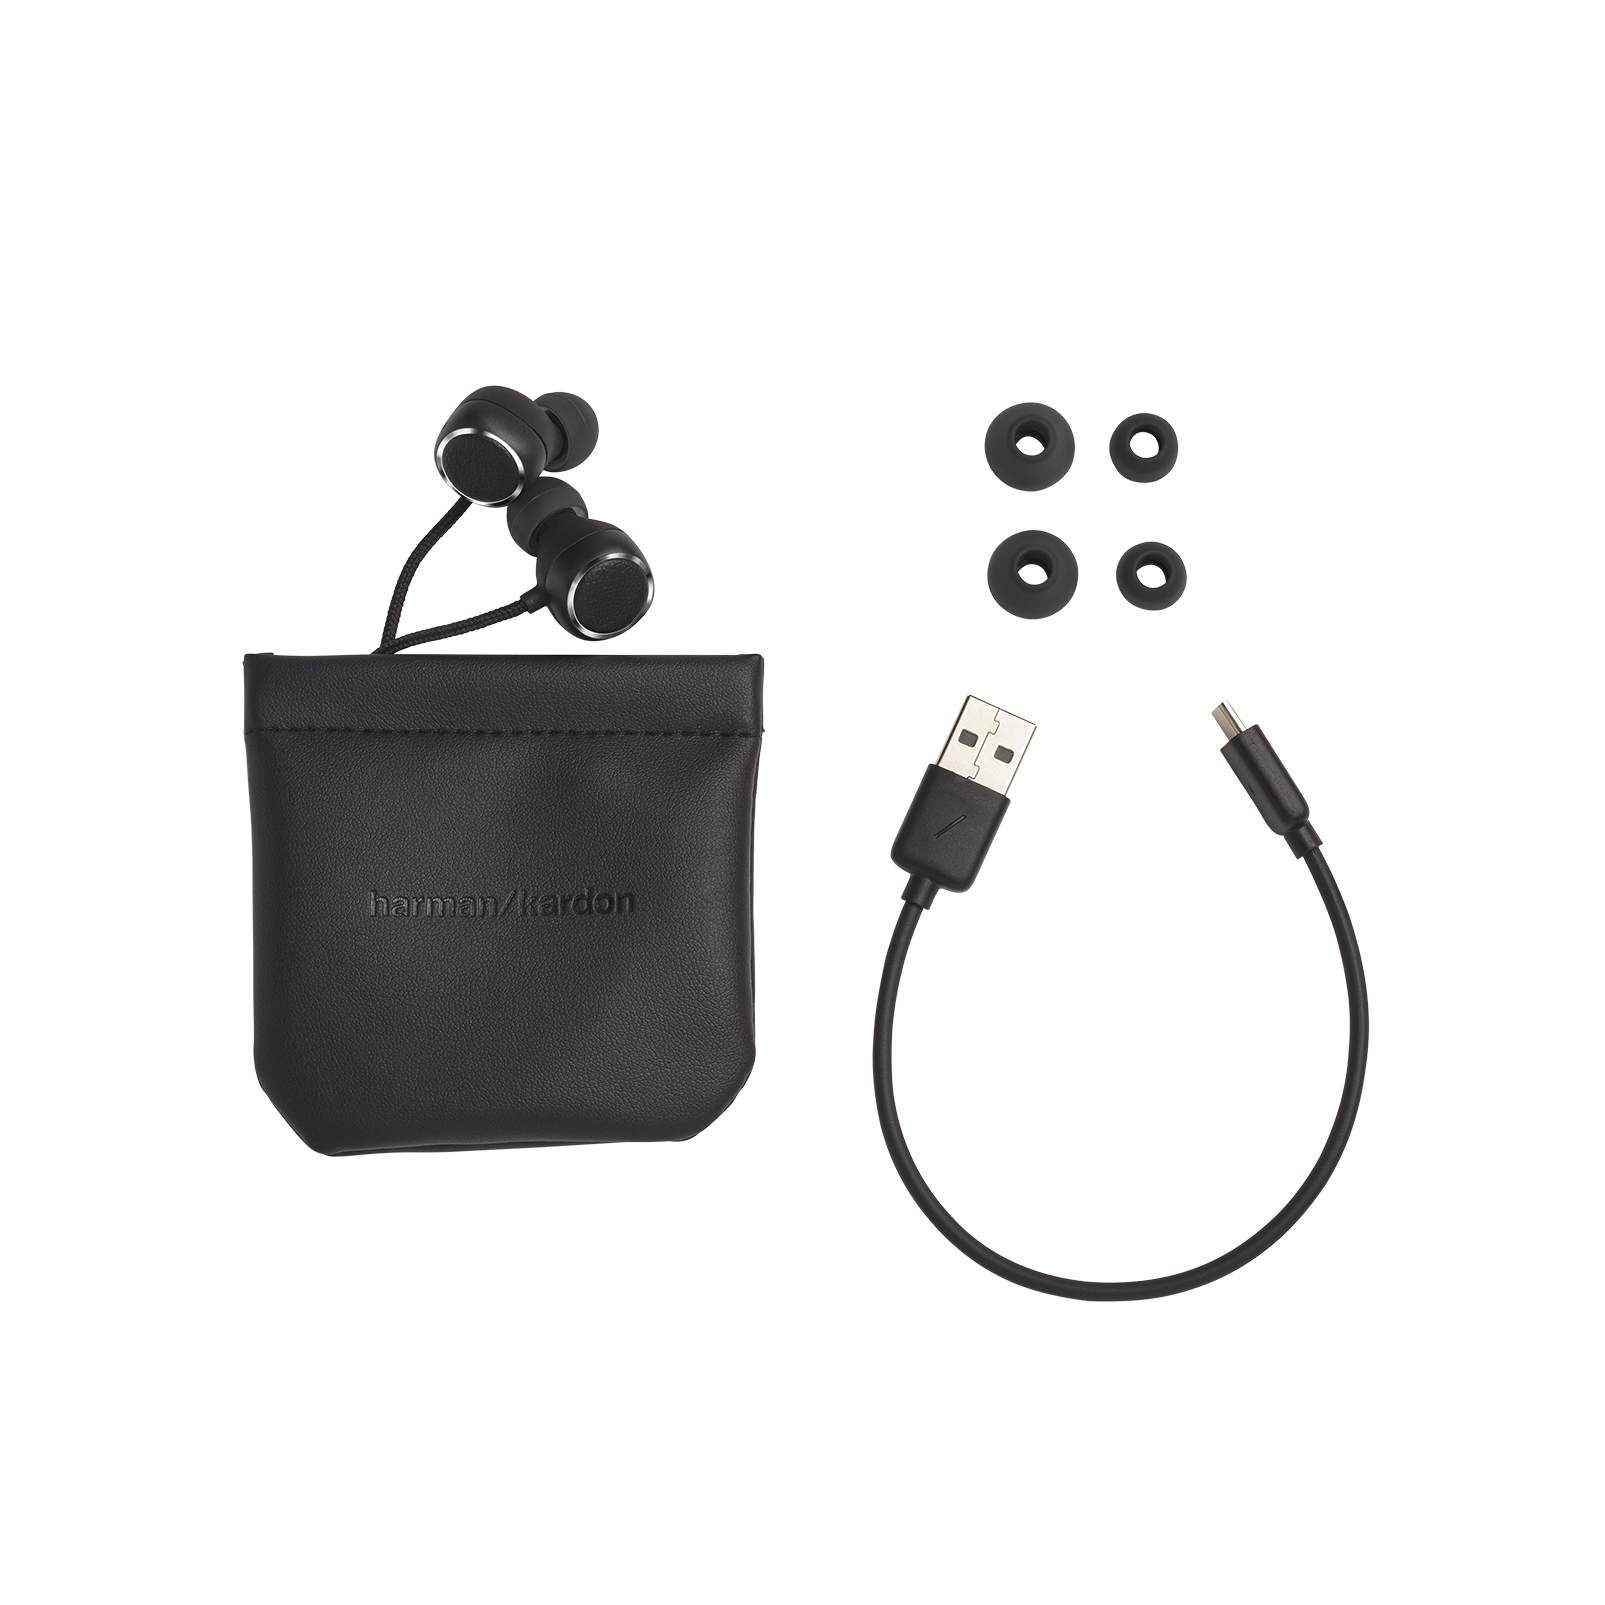 Harman Kardon FLY BT - Black - Bluetooth in-ear headphones - Detailshot 5